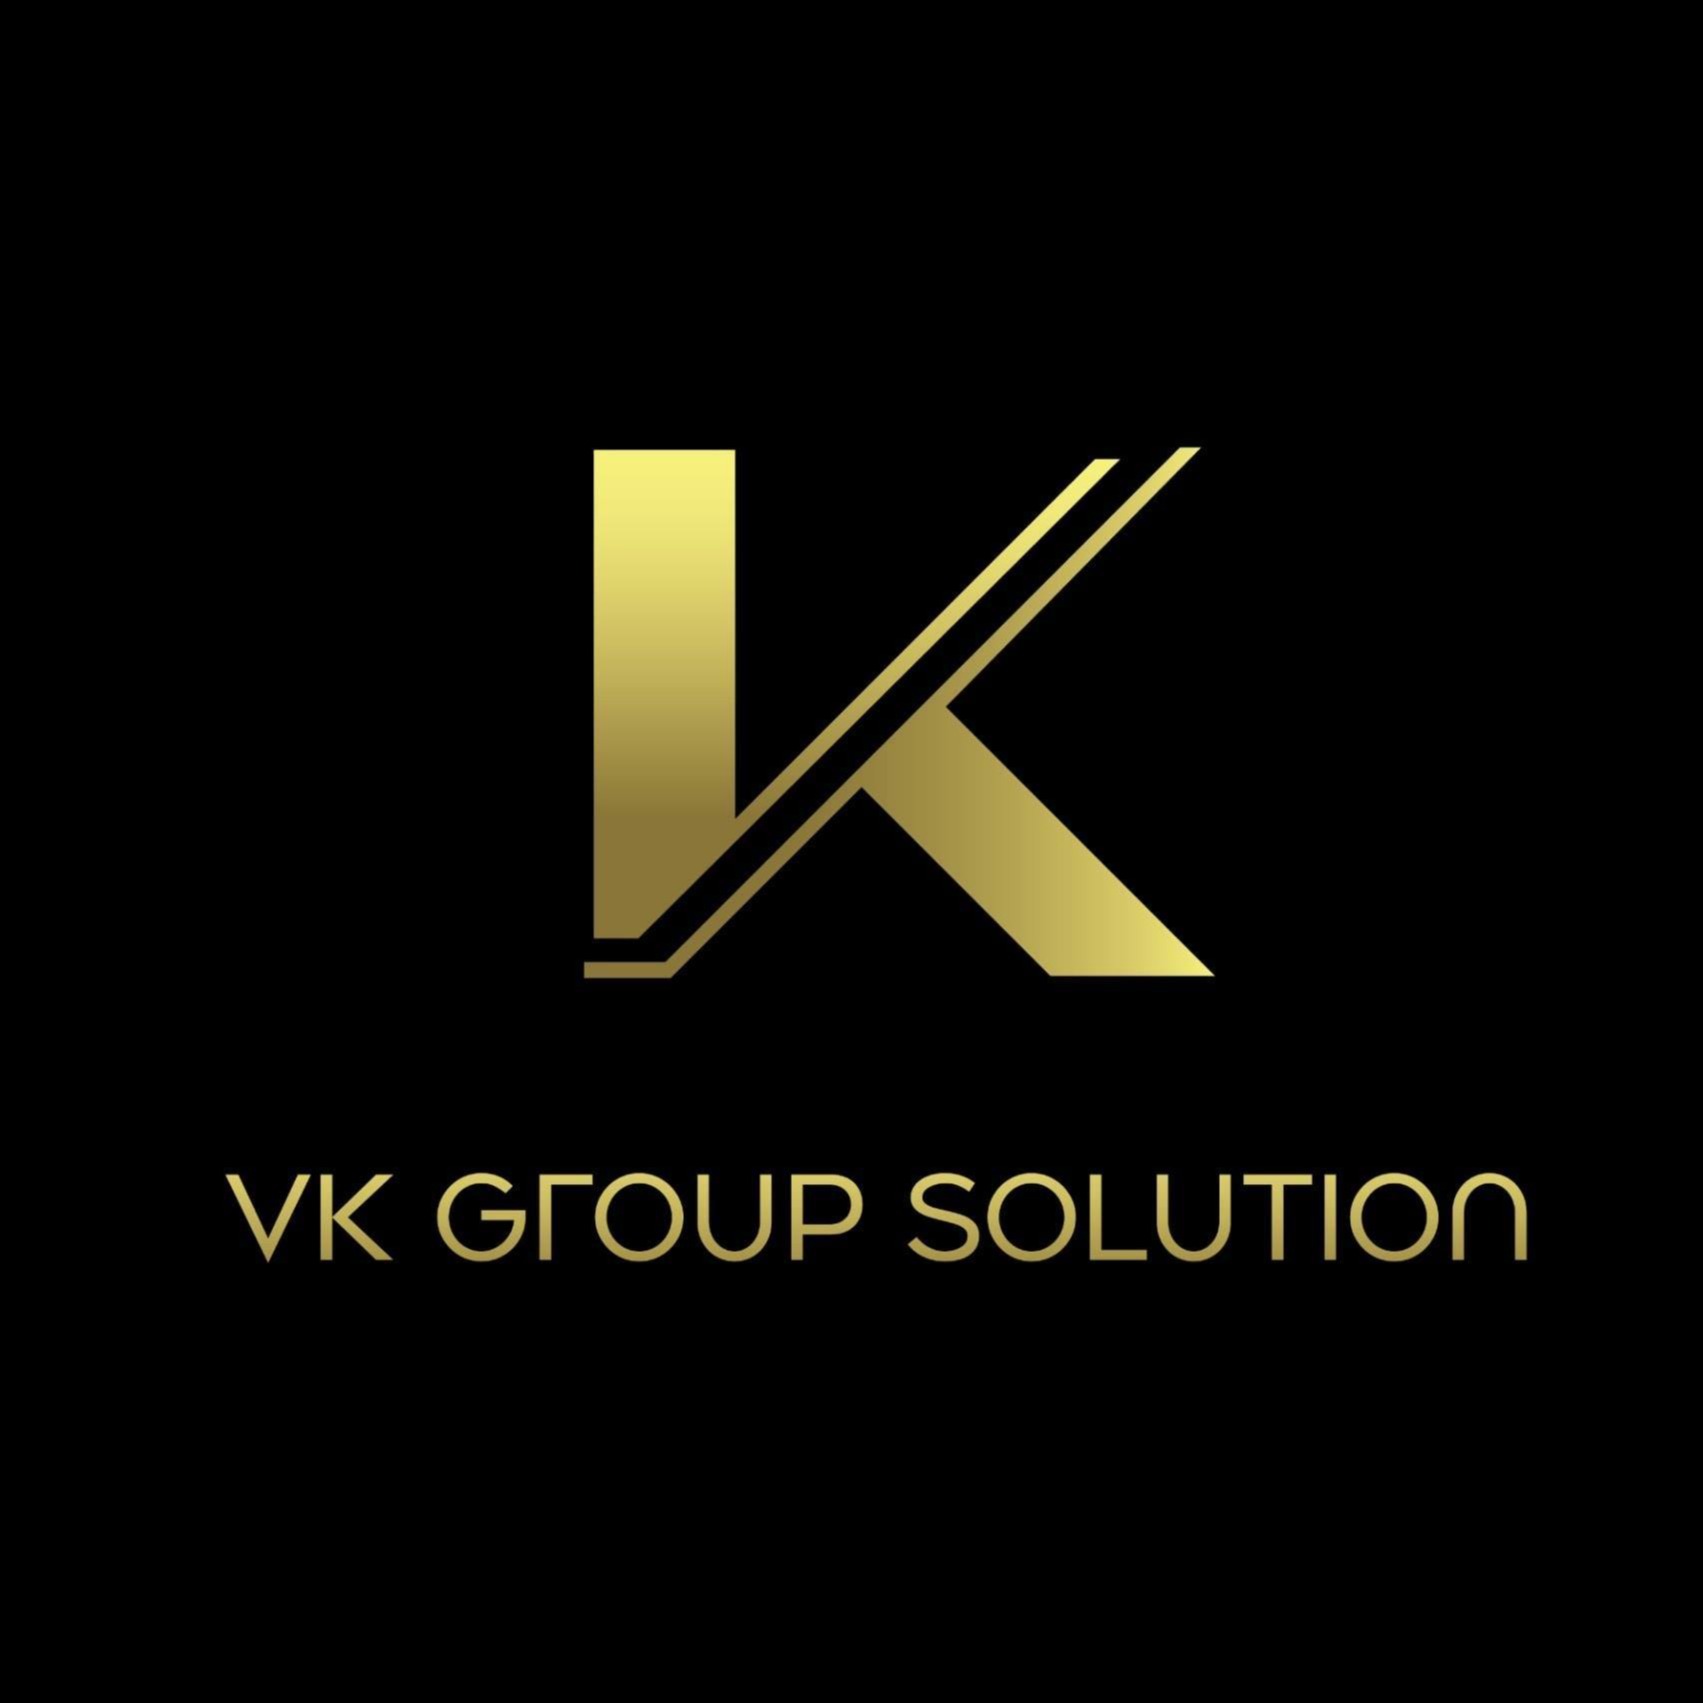 VK Group Solution